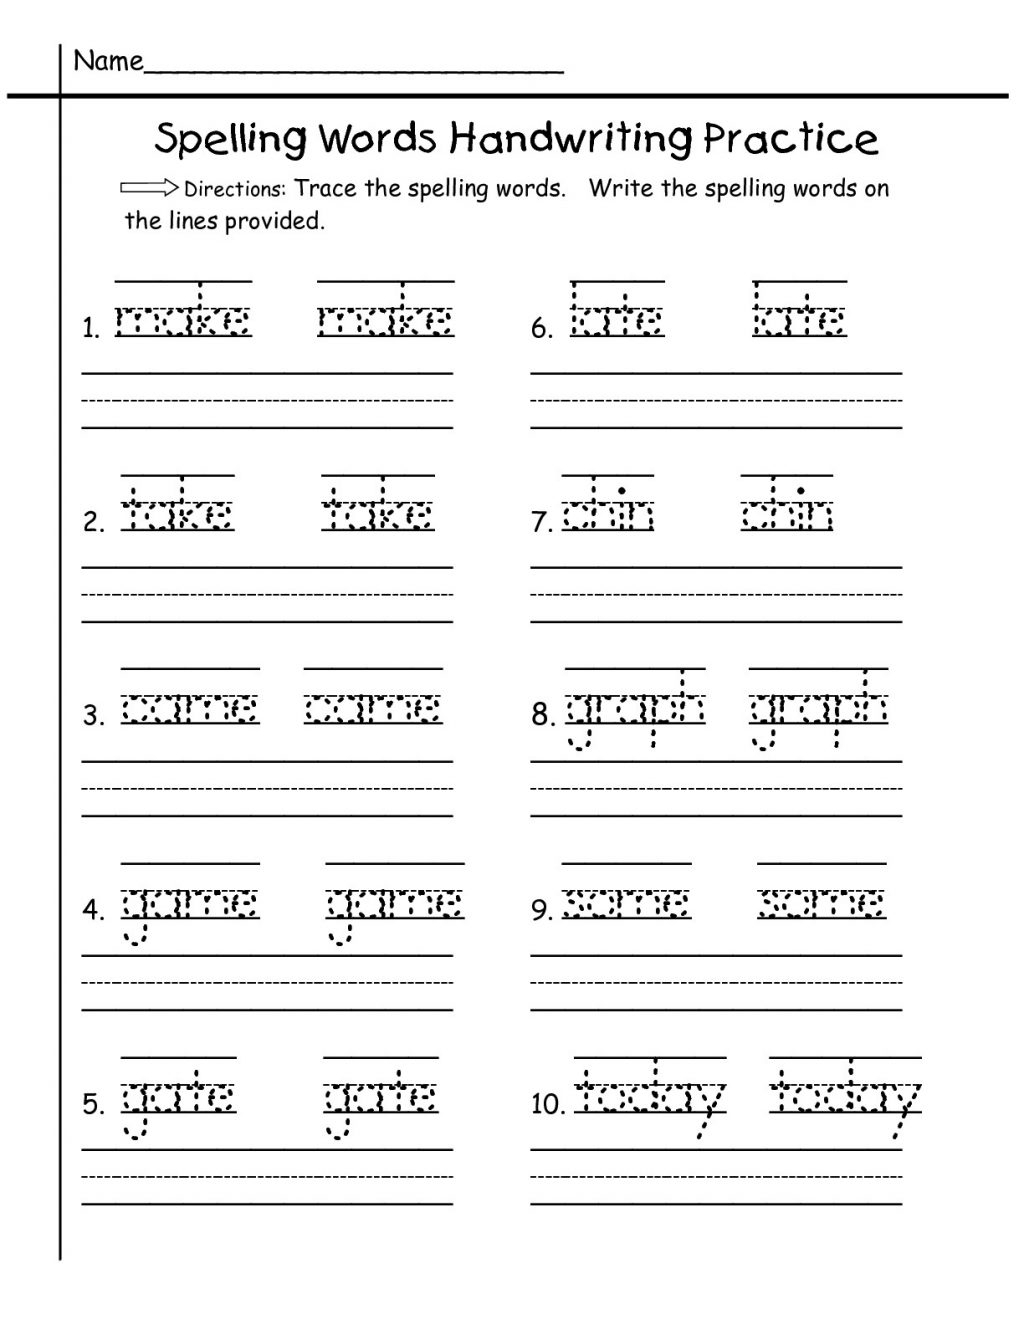 1St Ade Spelling Worksheets Best Coloring Pages For Kids in Alphabet Worksheets Generator